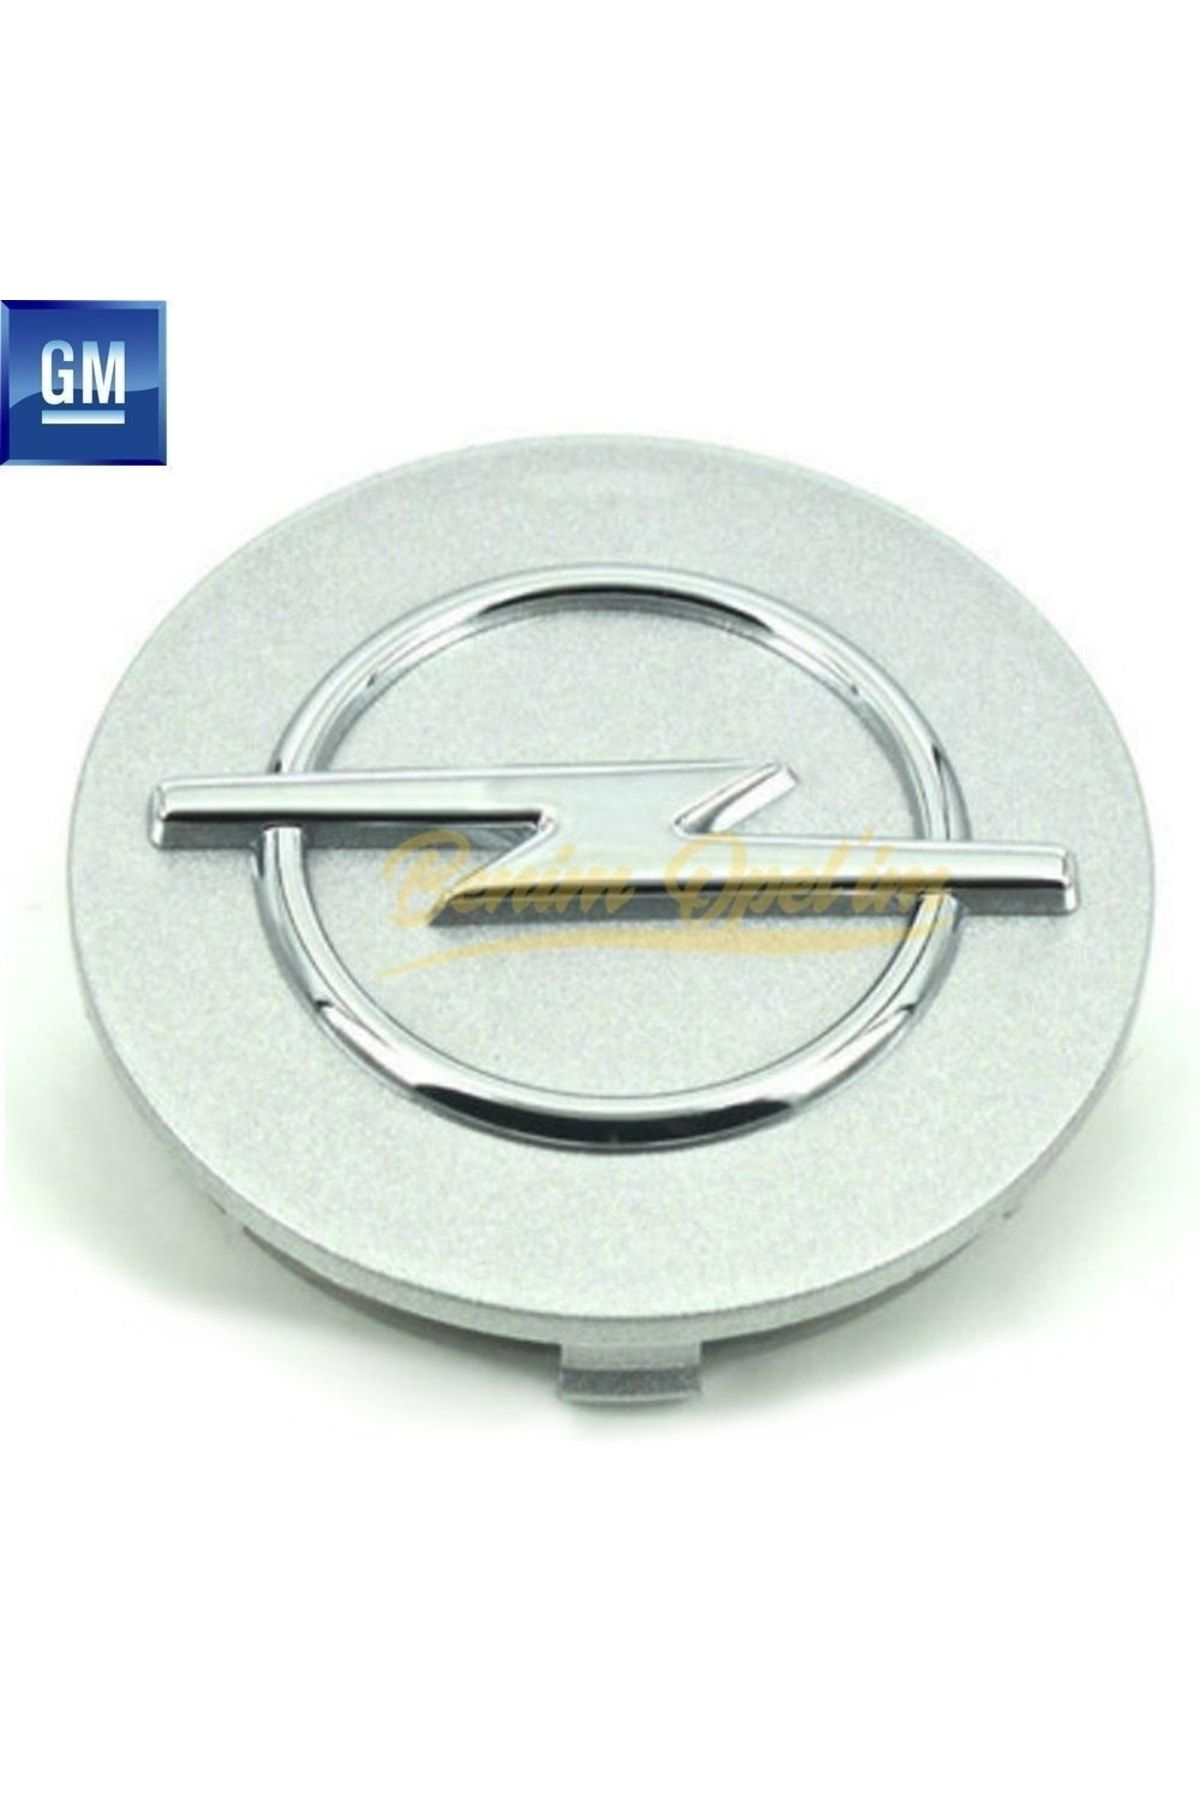 GM Jant Göbeği Gümüş Gri 15-16-17inç Kc-gd Dış Çap 6cm Opel Astra G-corsa C-meriva A-omega B-vectra B C